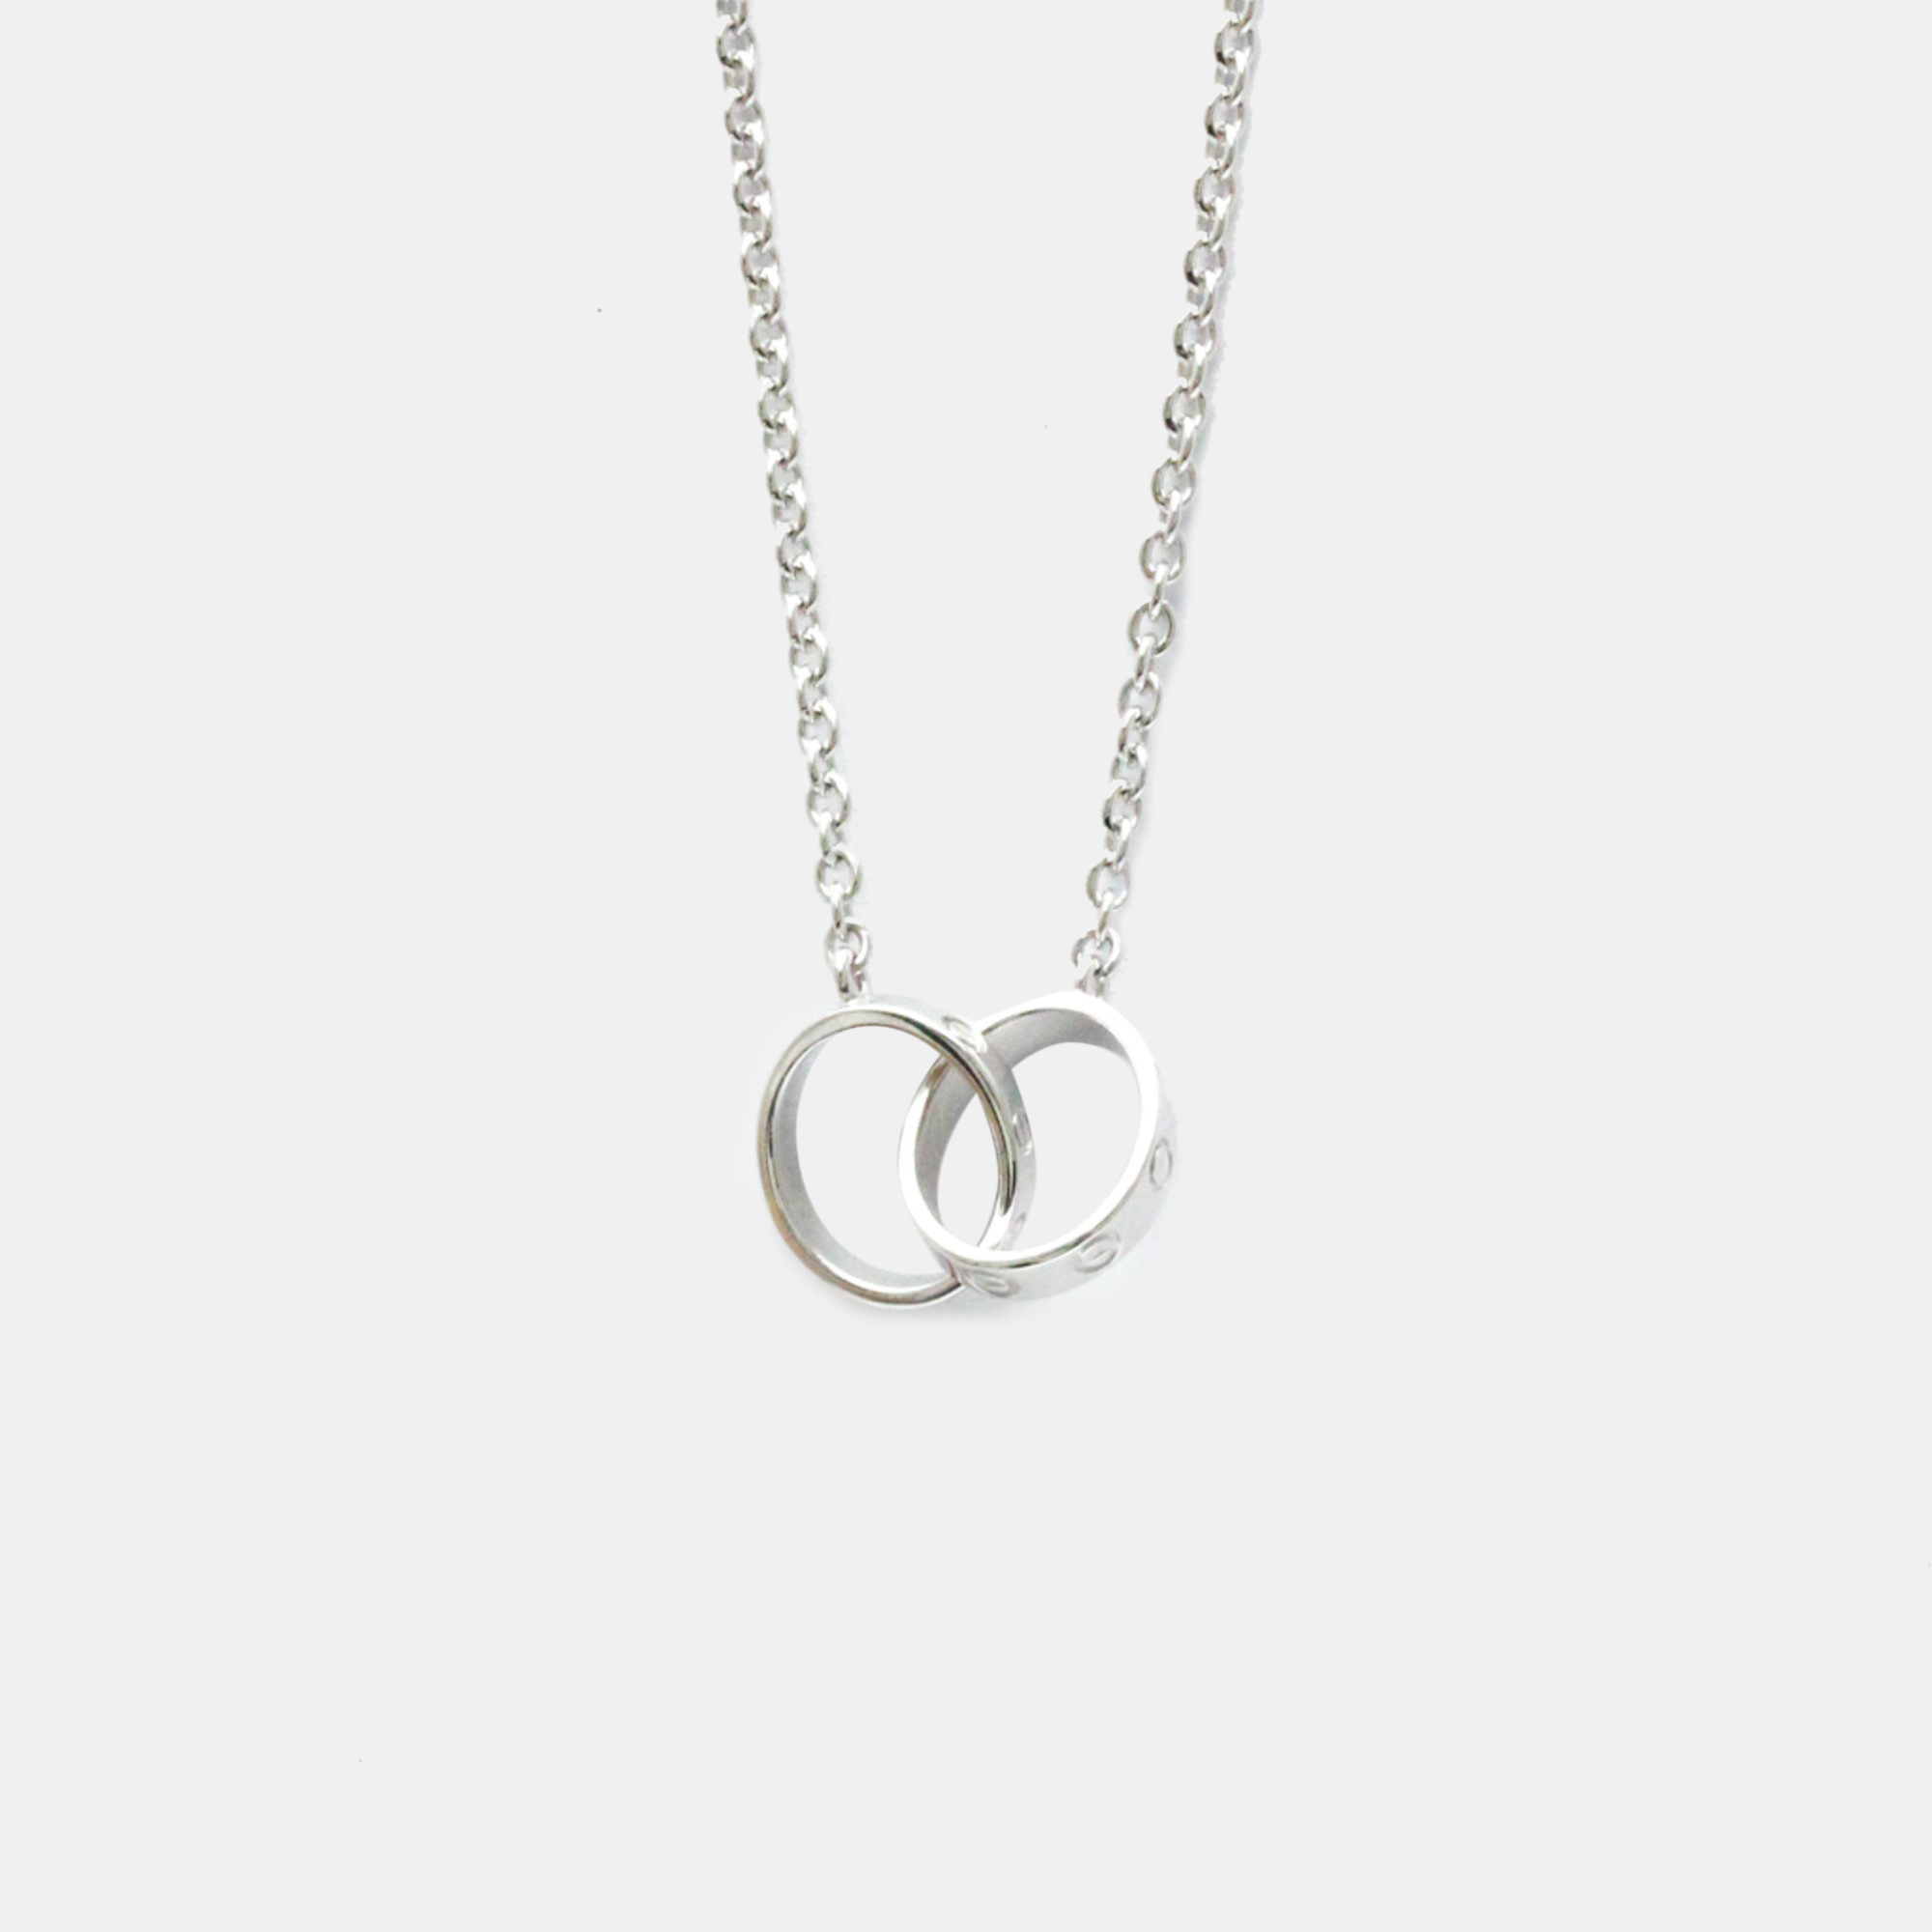 Cartier 18k white gold love pendant necklace